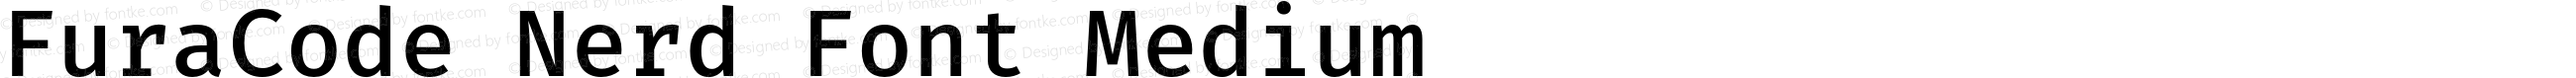 Fura Code Medium Nerd Font Complete